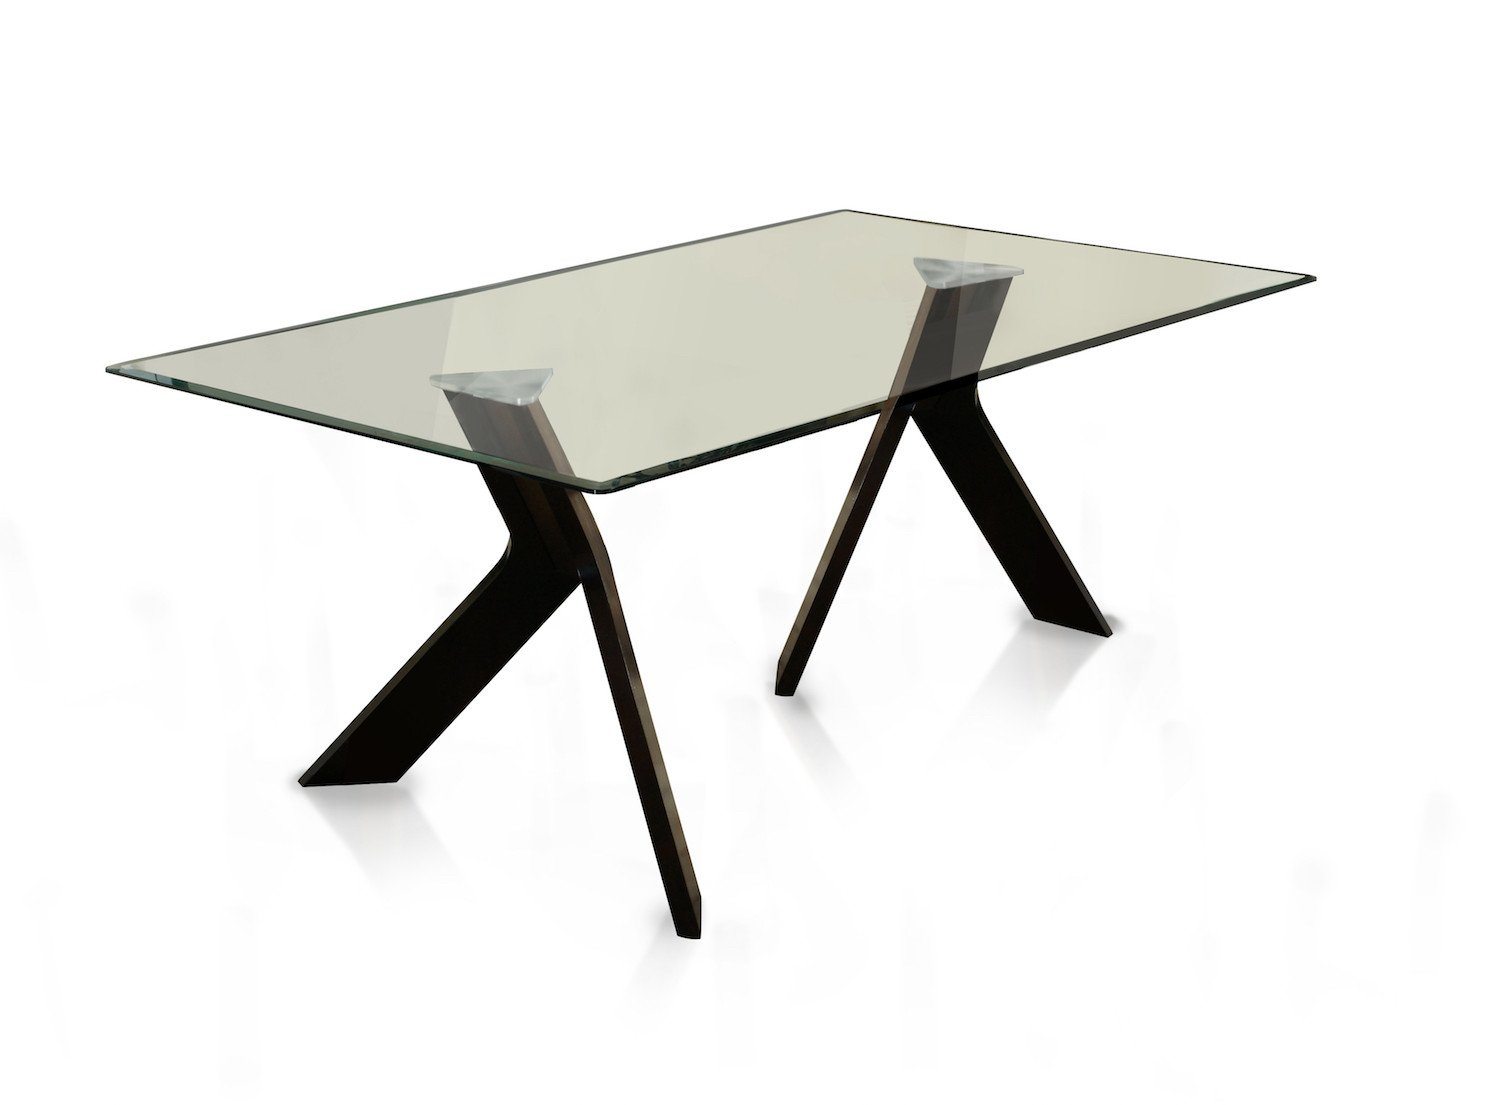 Tenya Modern Angular Glass Top Dining Table Espresso Furniture Enitial Lab Espresso 